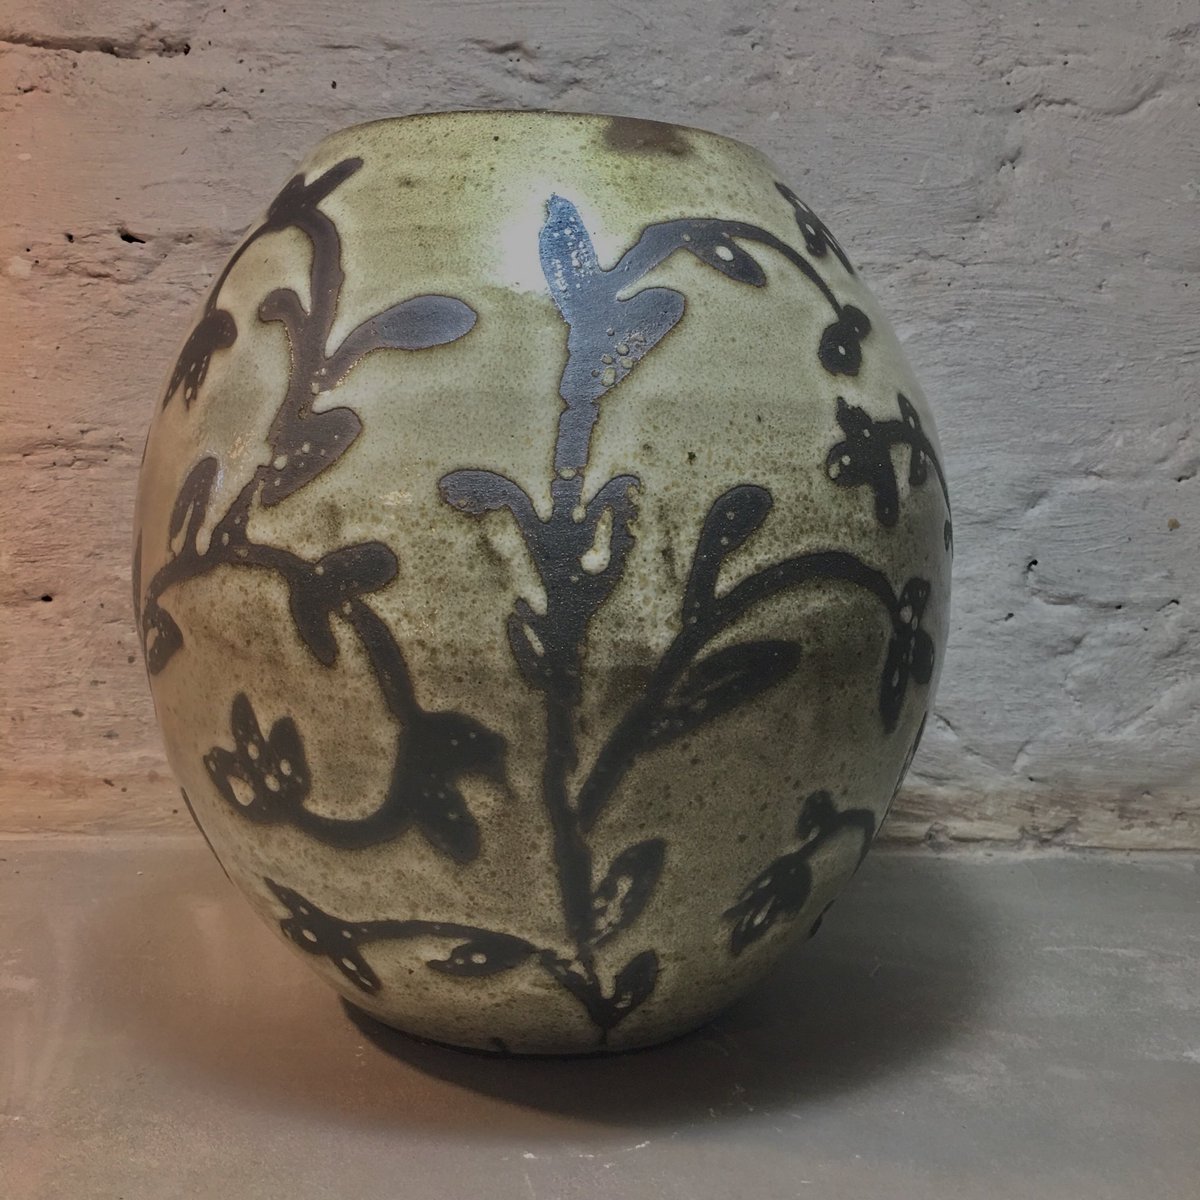 Large stoneware vase with #waxresistglazing #blackclay #rikaherbst #stonewareceramics #makersmovement #potter #potterylove #ceramilicious #contemporaryceramics #southafricanceramics #pottery #potterylove #ceramicart #ceramics